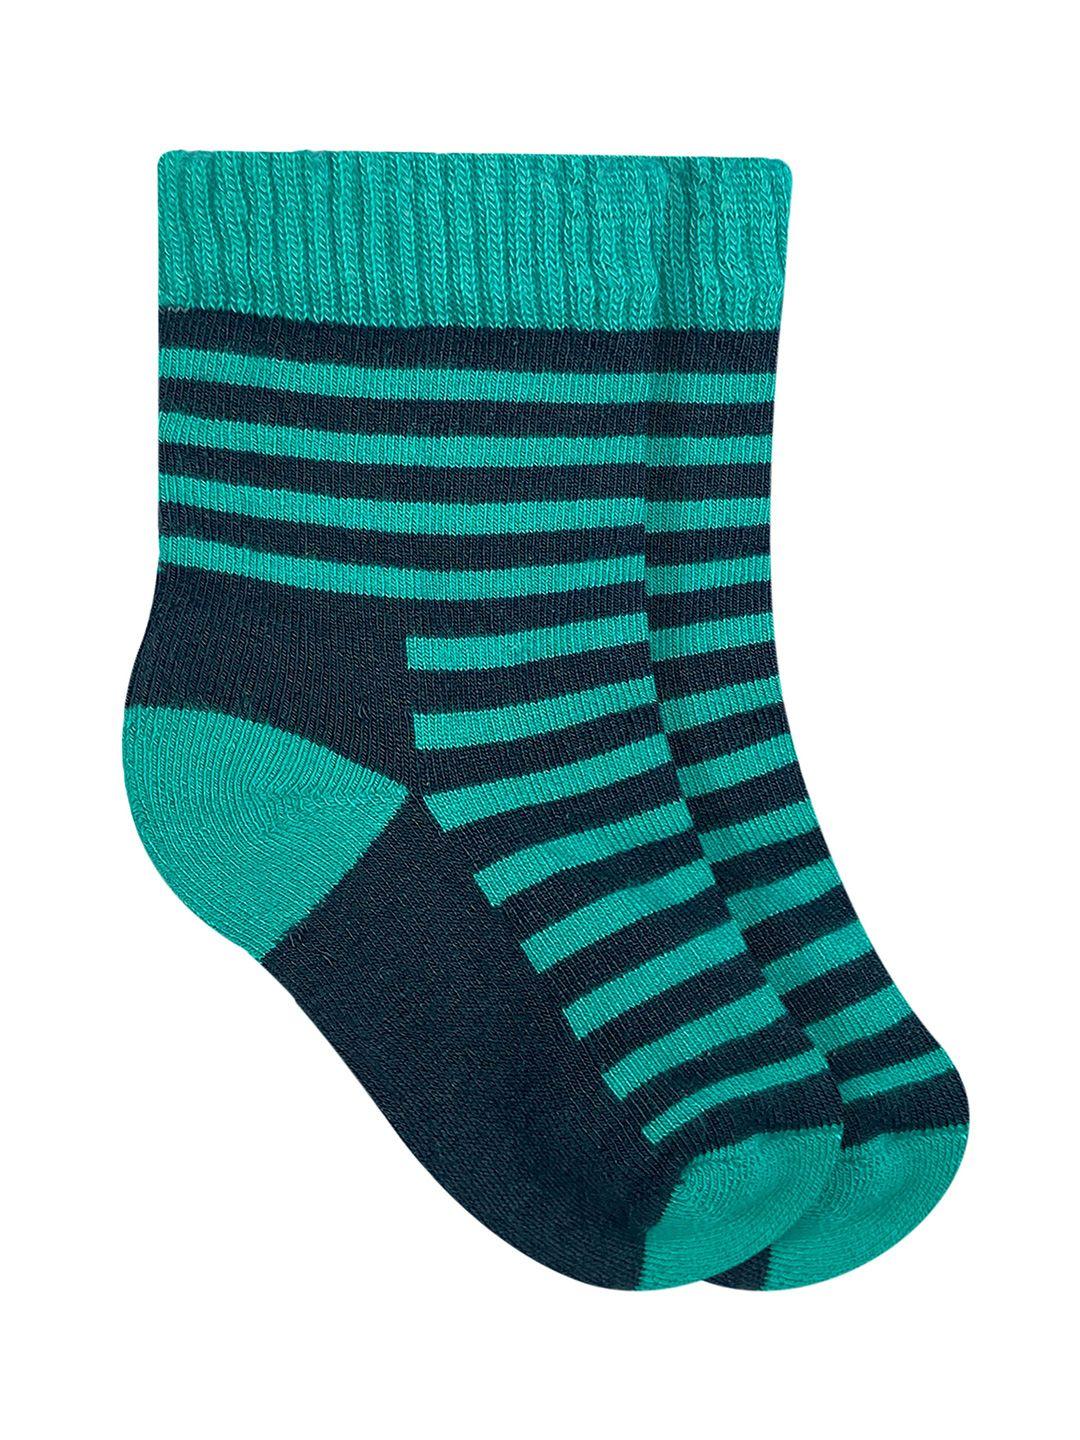 heelium kids pack of 2 teal green & navy blue striped calf-length socks